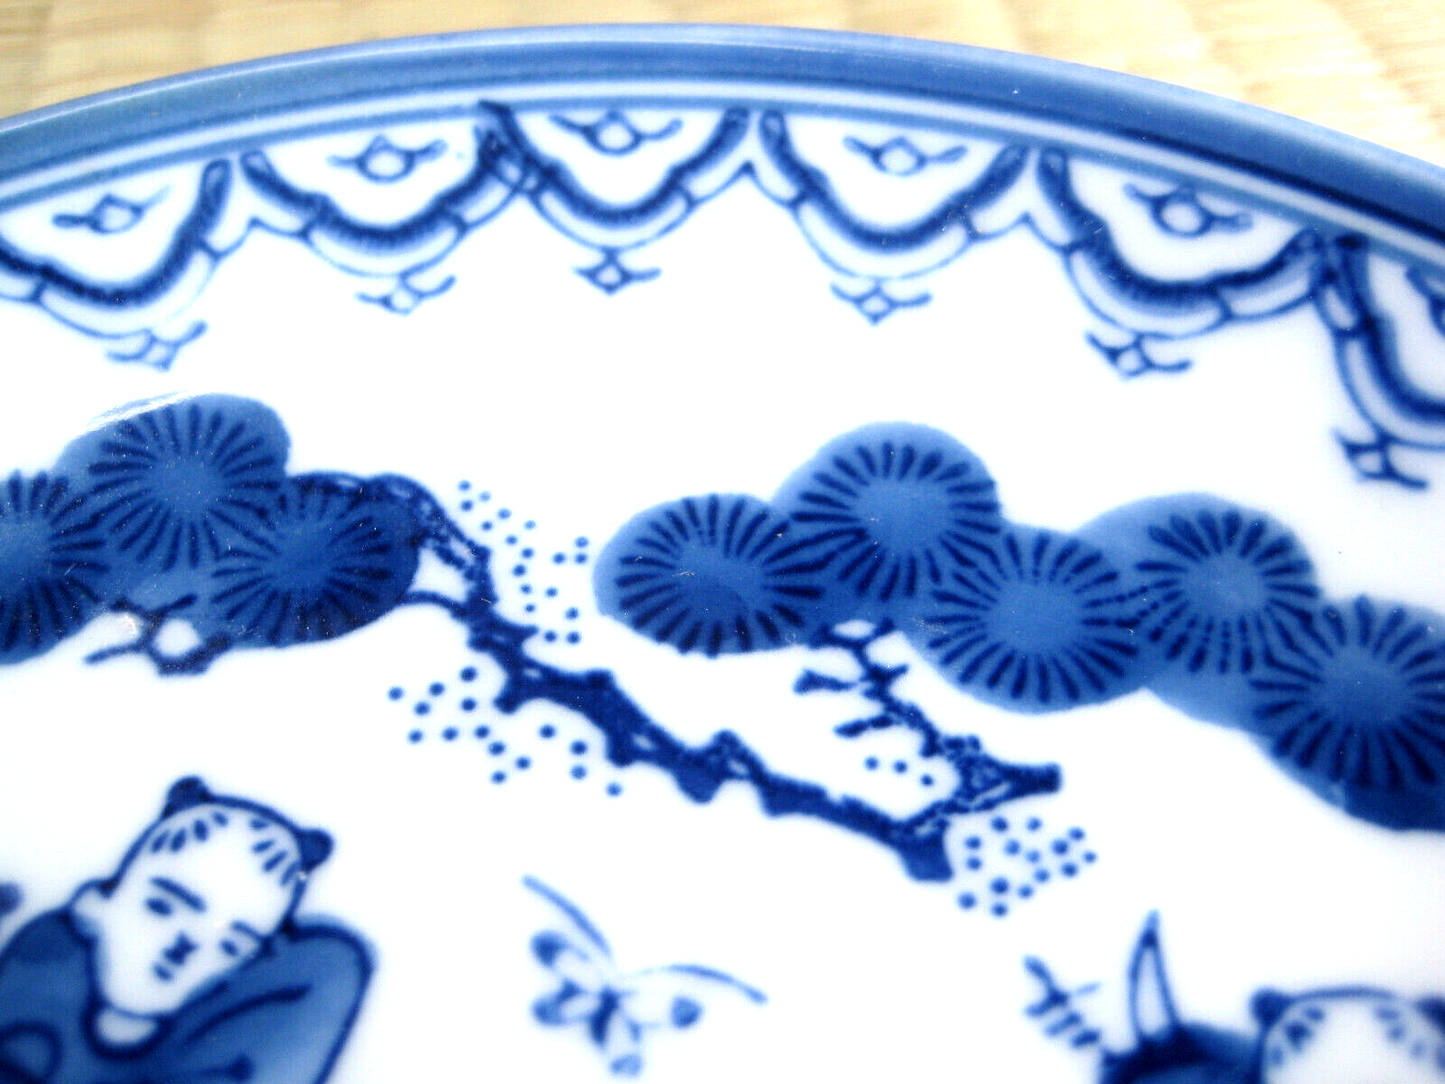 Vintage Japanese Traditional Ceramic Blue & White Chinese 5.5" Dinner Plate